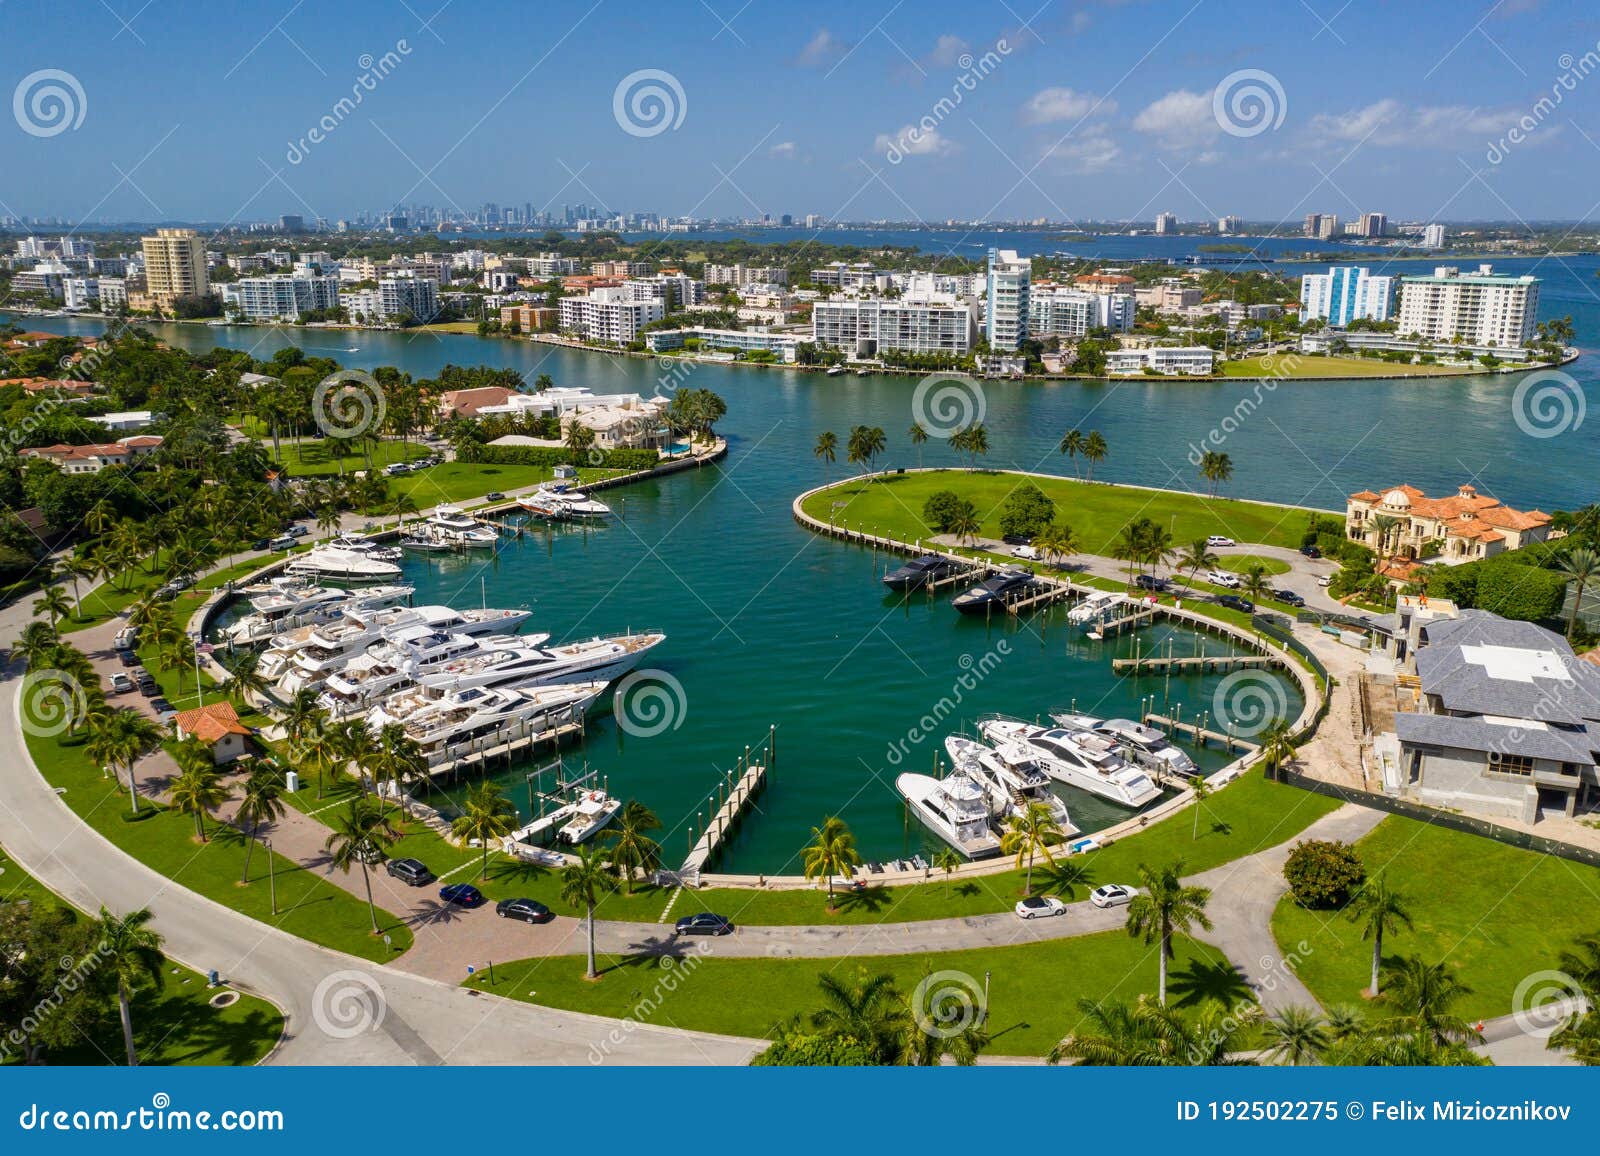 bal harbour marina with luxury yachts miami beach fl aerials